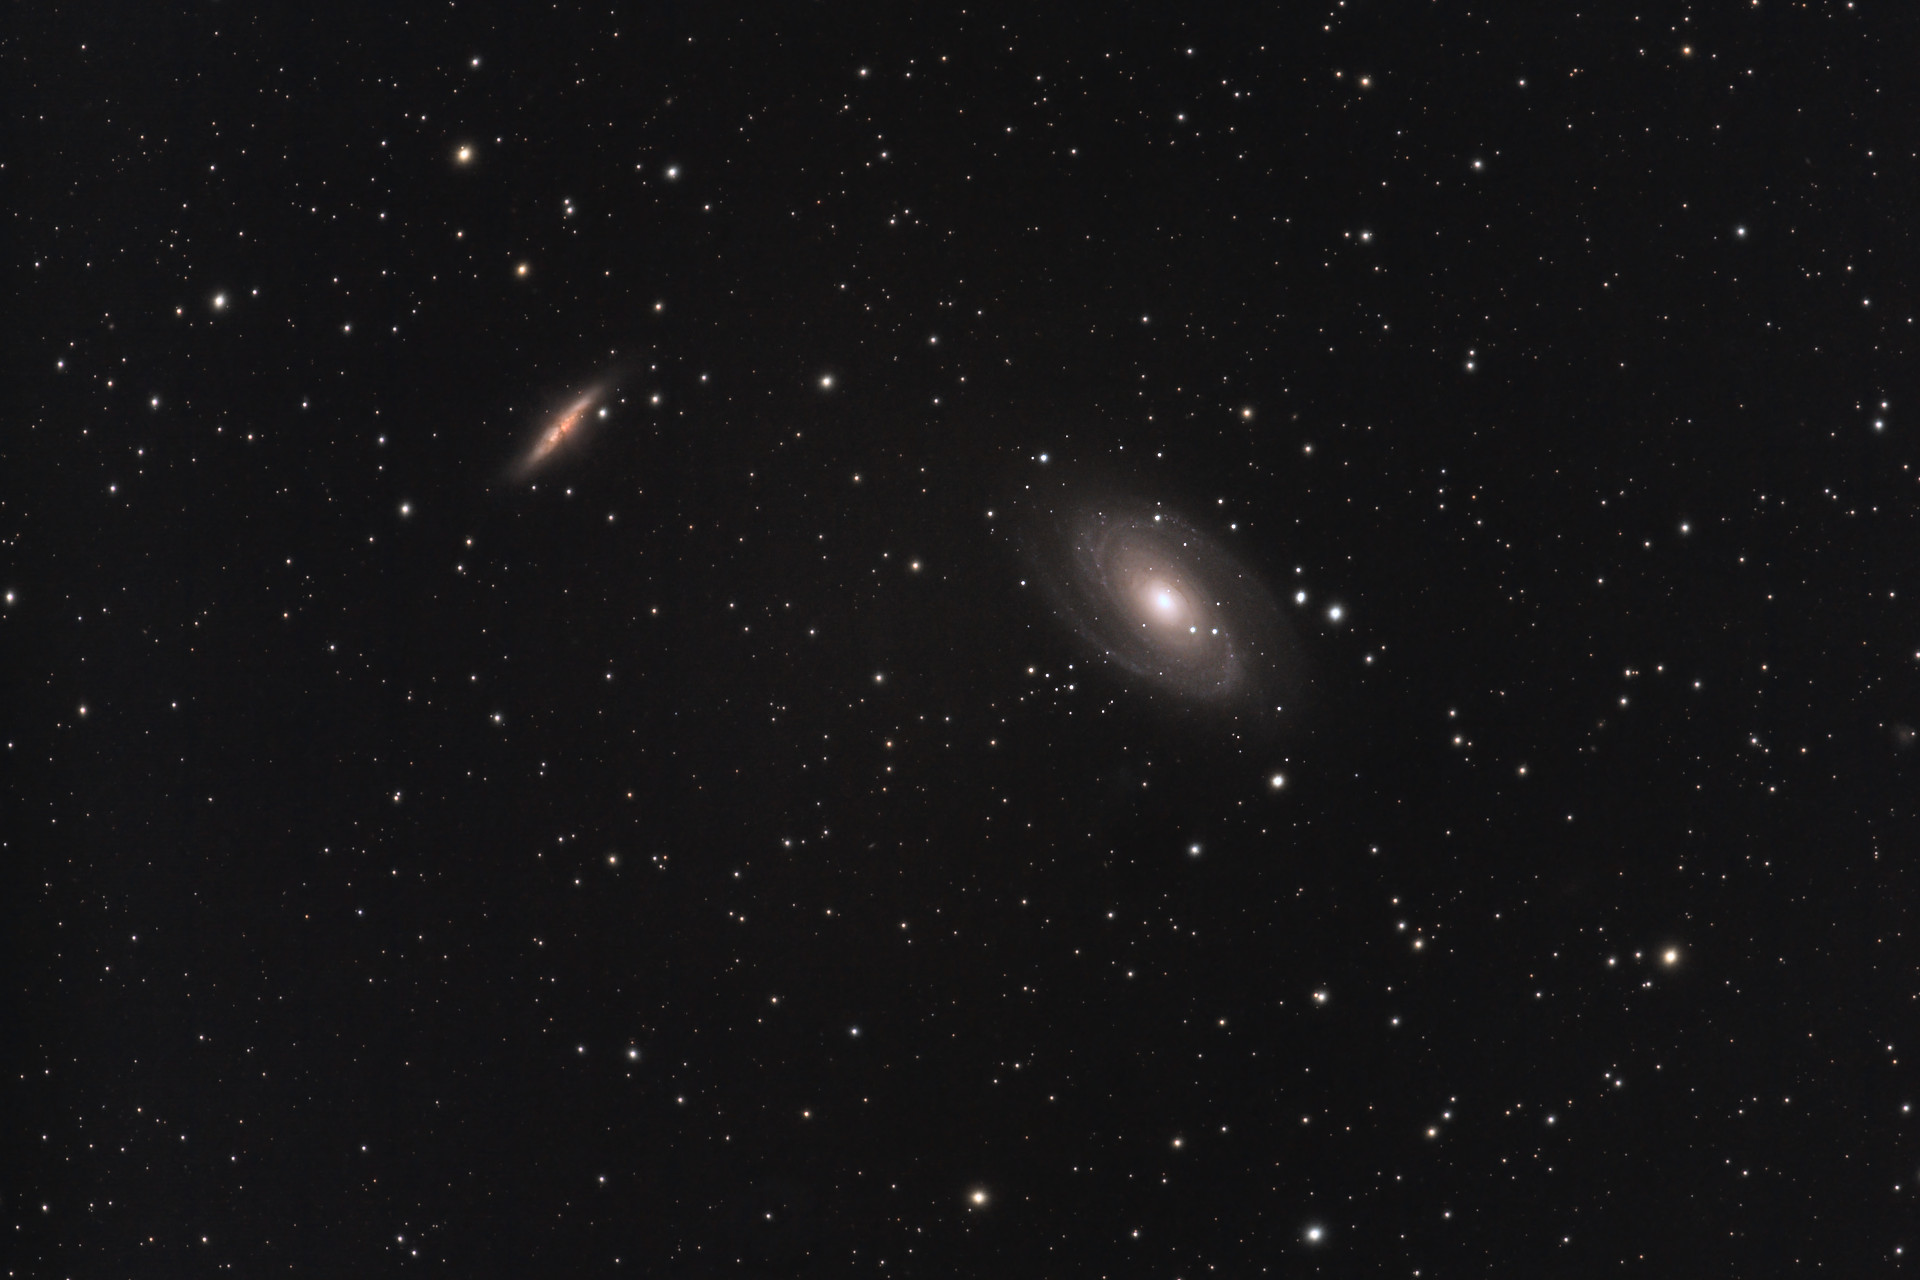 Messier 81 & Messier 82 - Bode & Cigar Galaxies